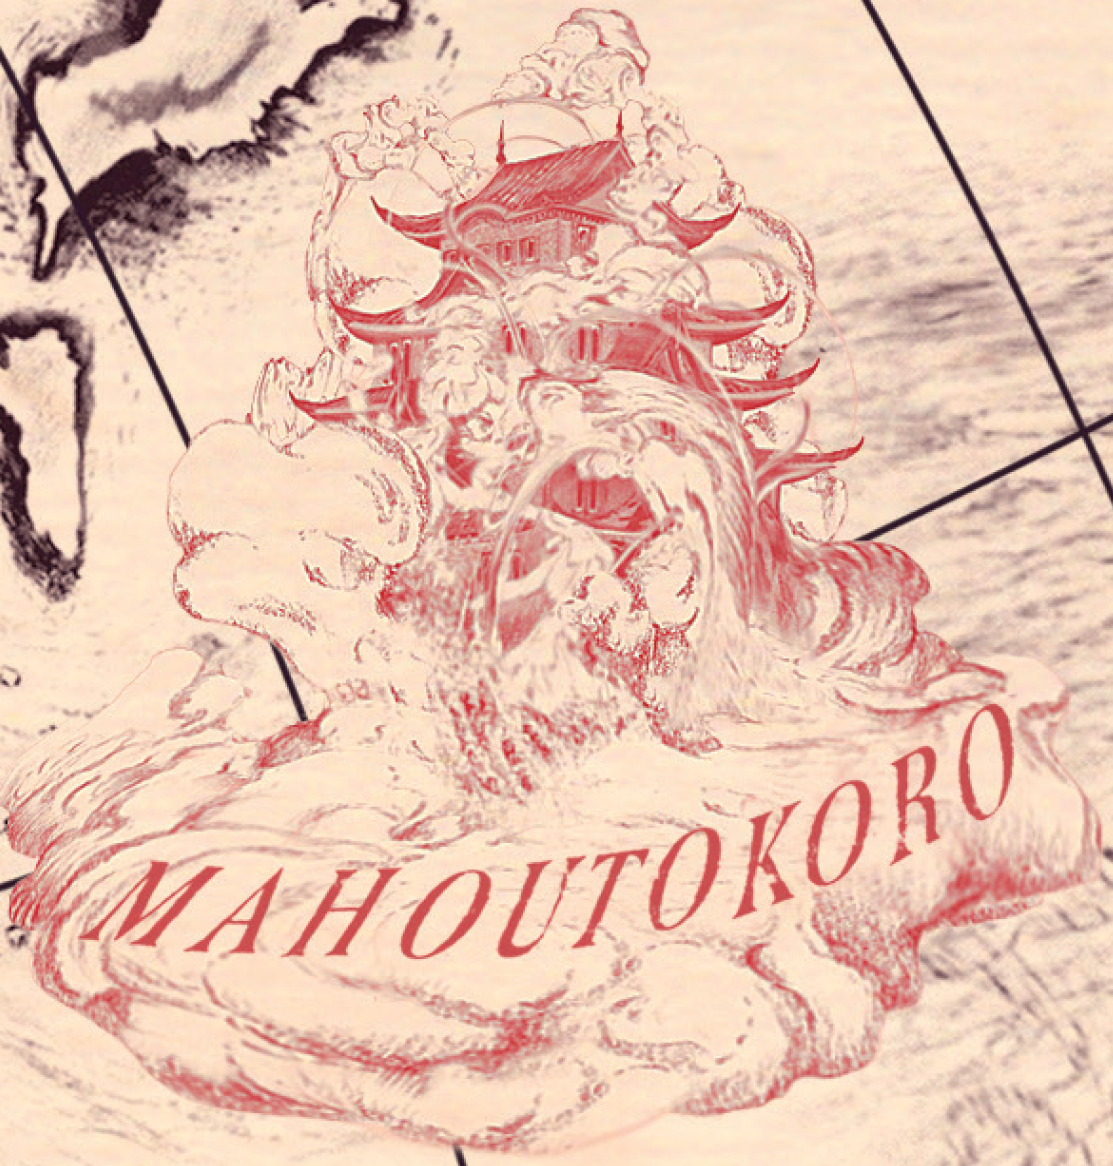 mahoutokoro school of magic